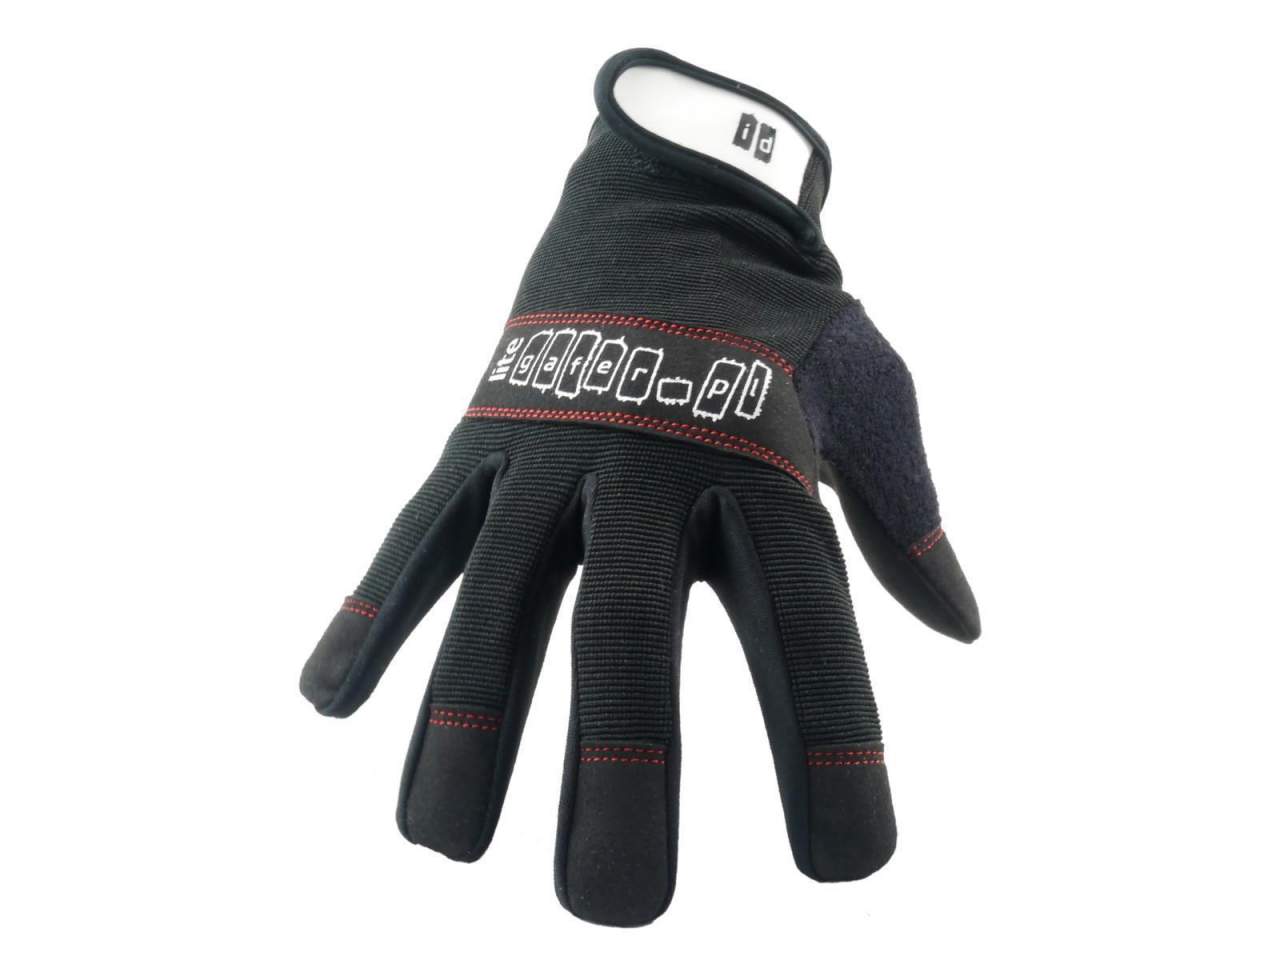 GAFER-PL Lite glove Handschuh- Grsse S